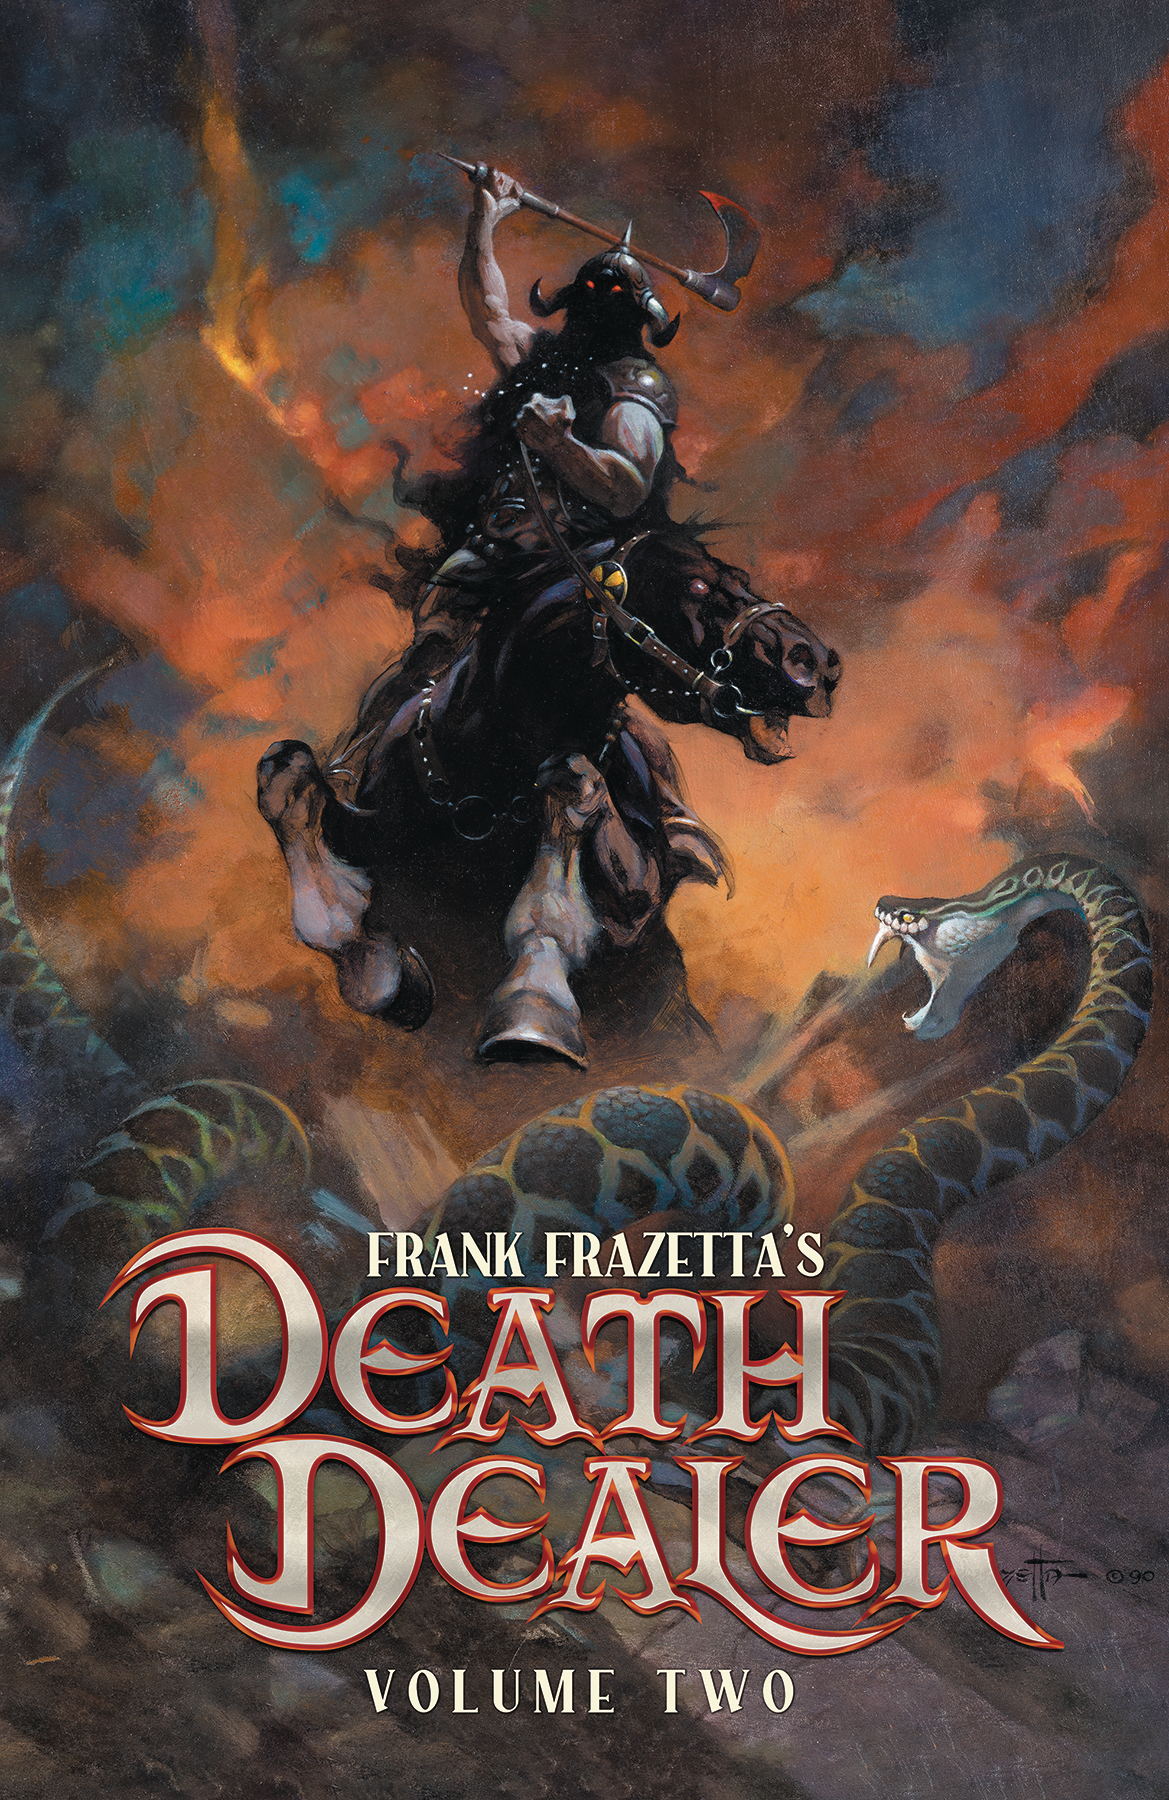 Frank Frazetta Death Dealer Graphic Novel Volume 2